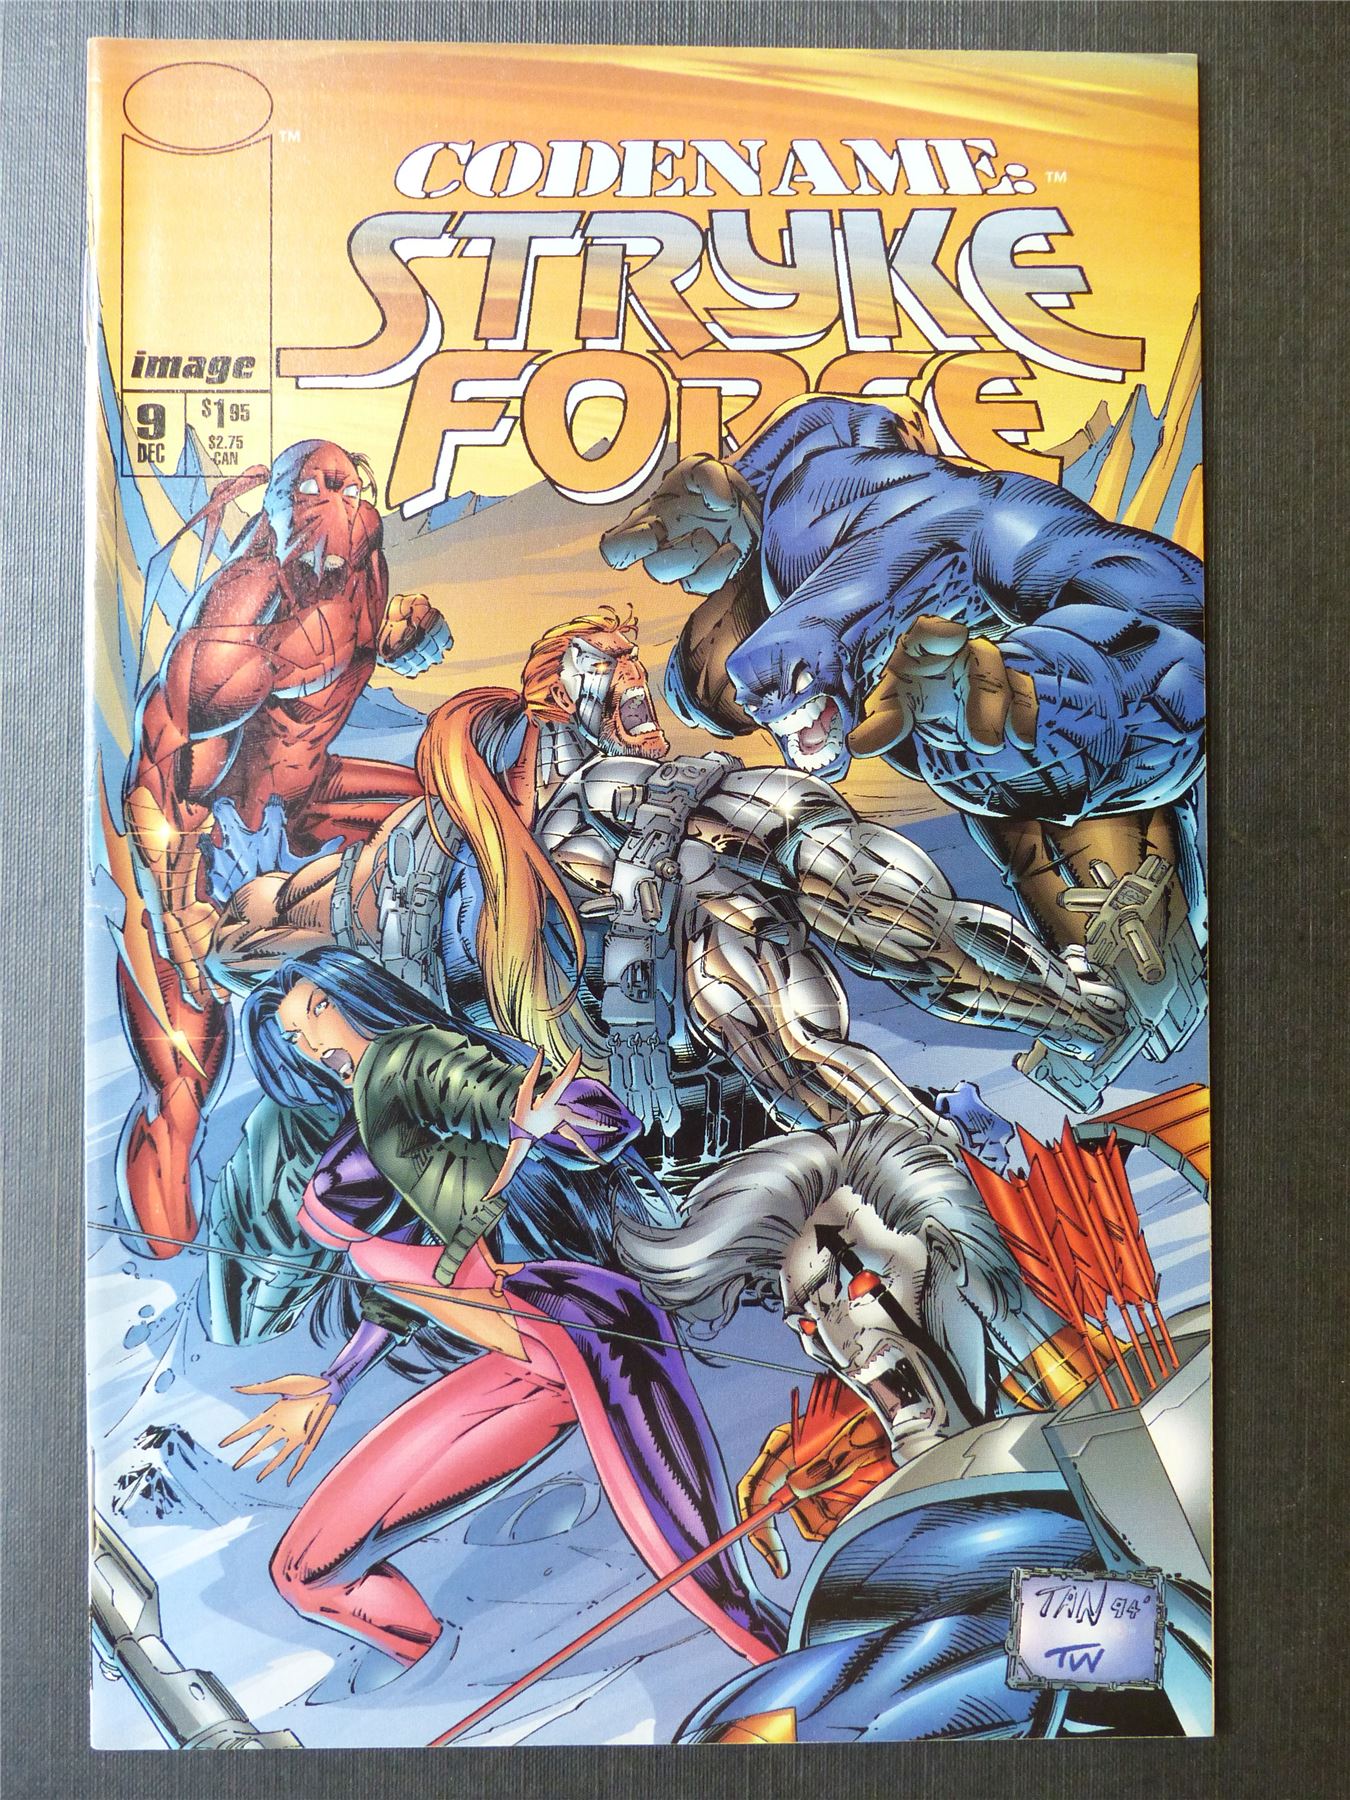 Codename: STRYKE Force #9 - Image Comics #5EU